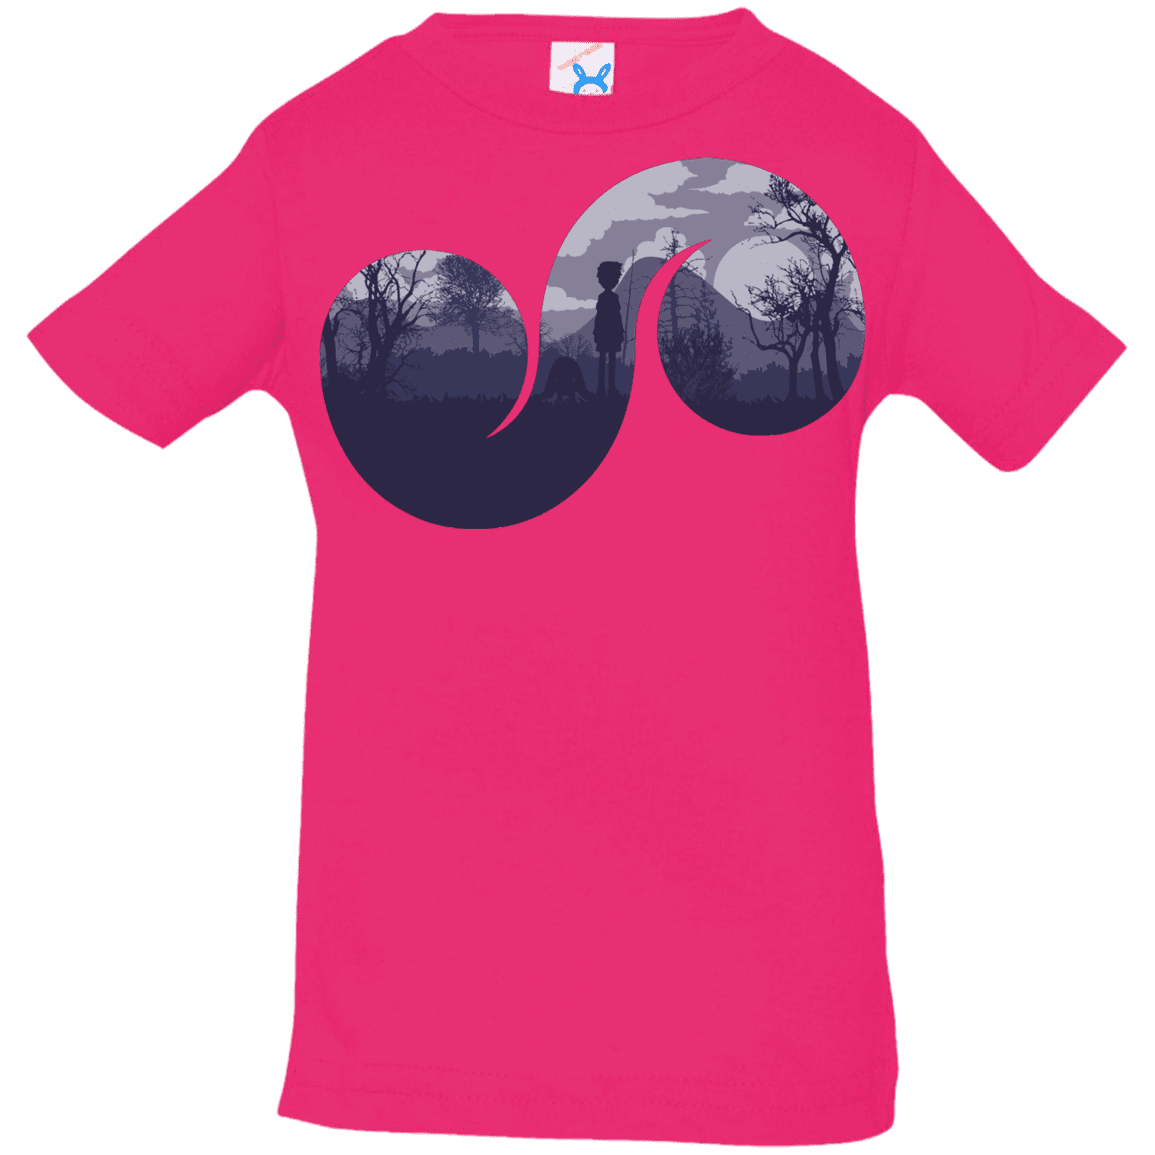 T-Shirts Hot Pink / 6 Months Destiny Infant Premium T-Shirt